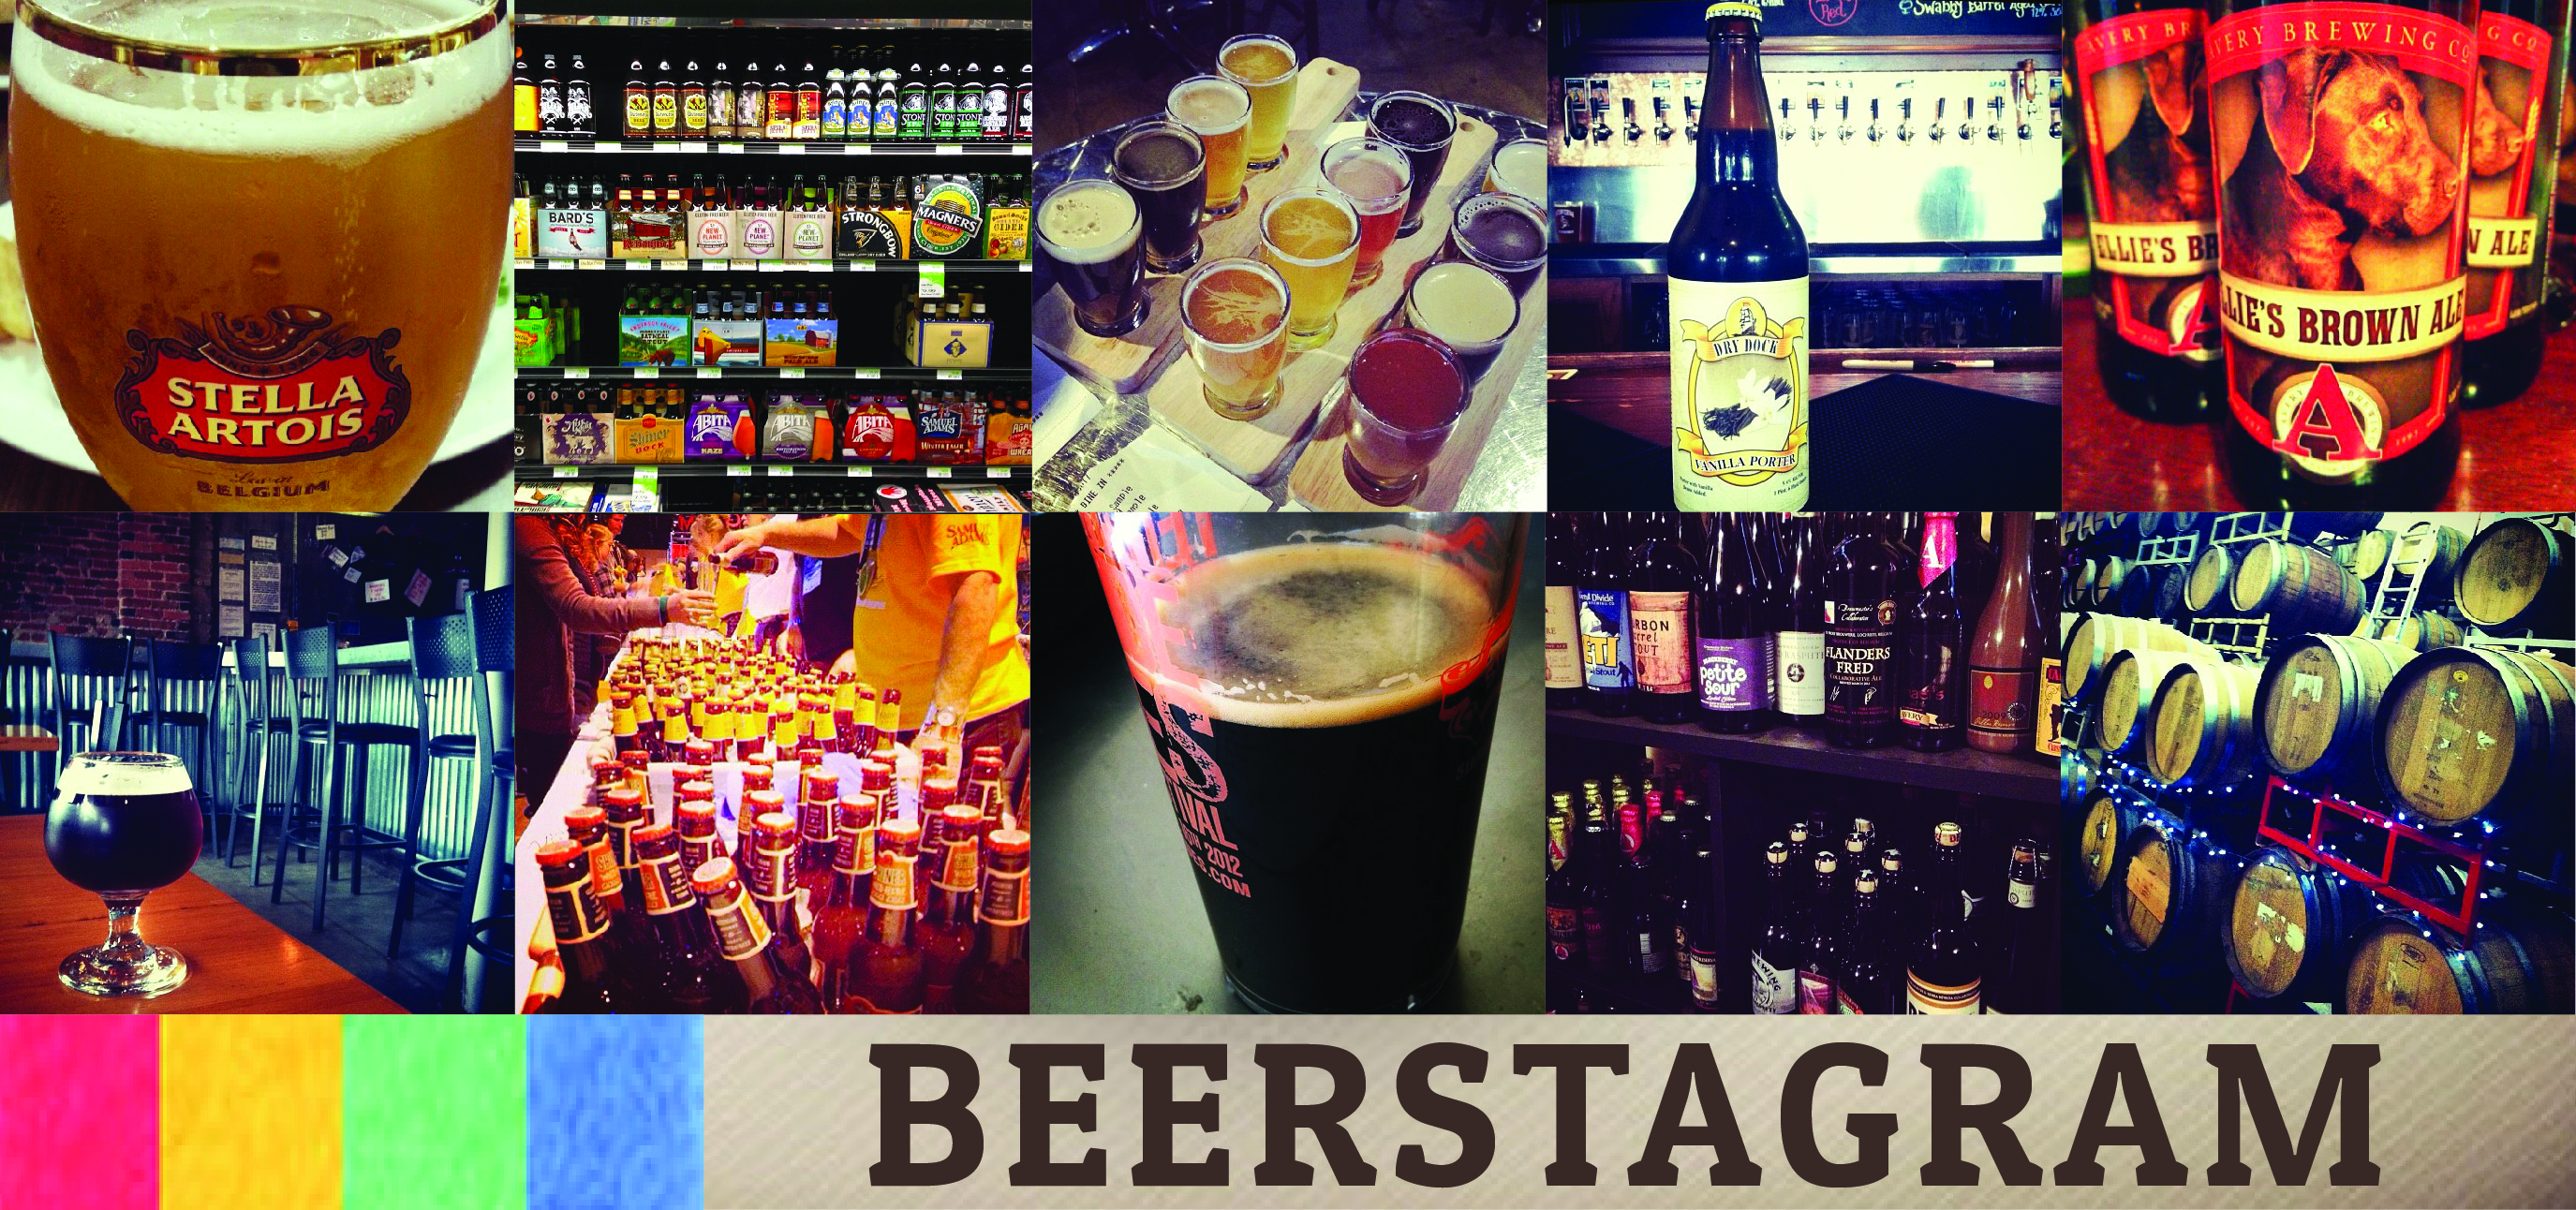 Beerstagrams 1/31- 2/7